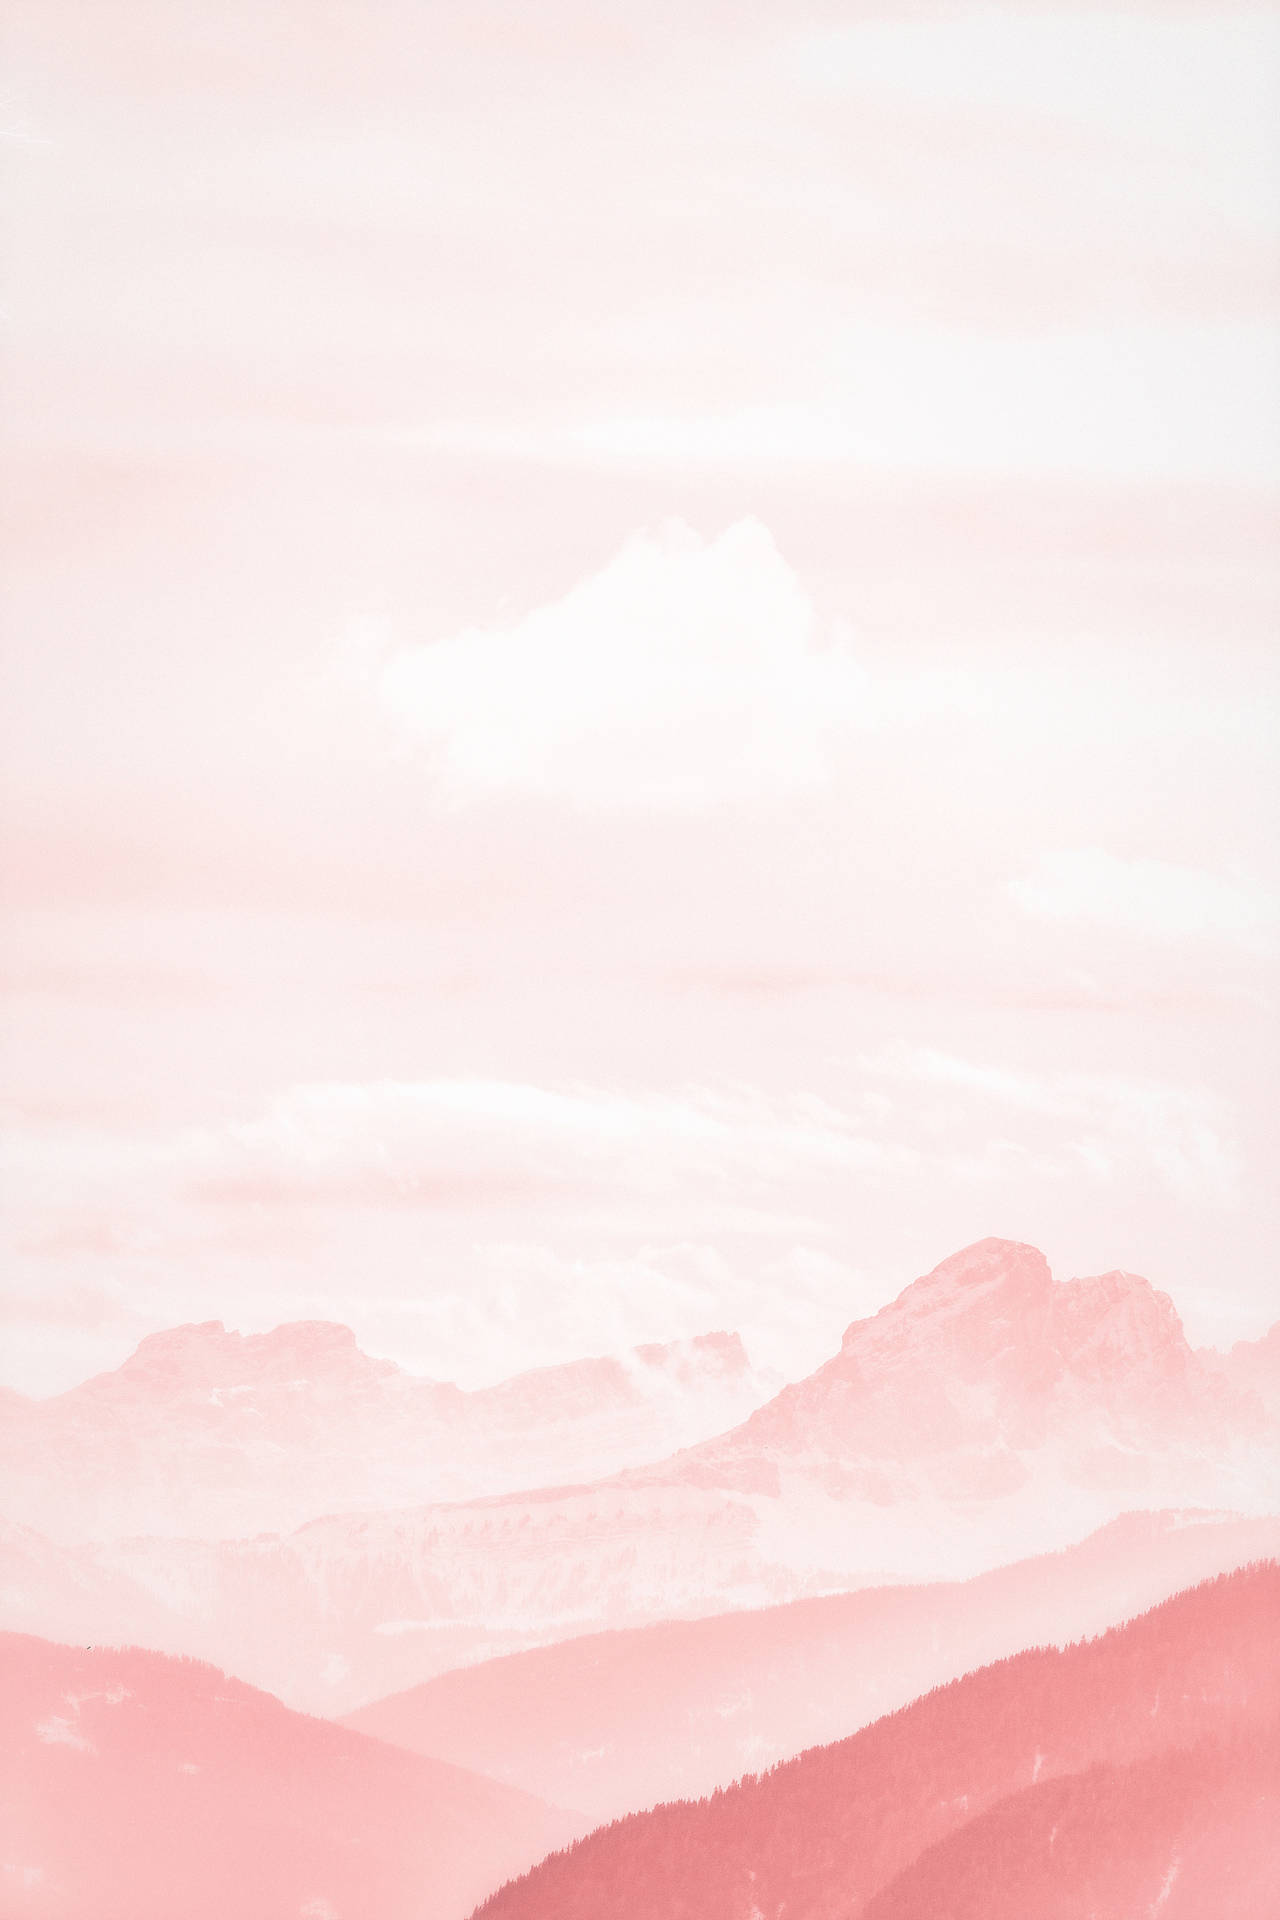 Uncielo Rosa Con Montañas Fondo de pantalla